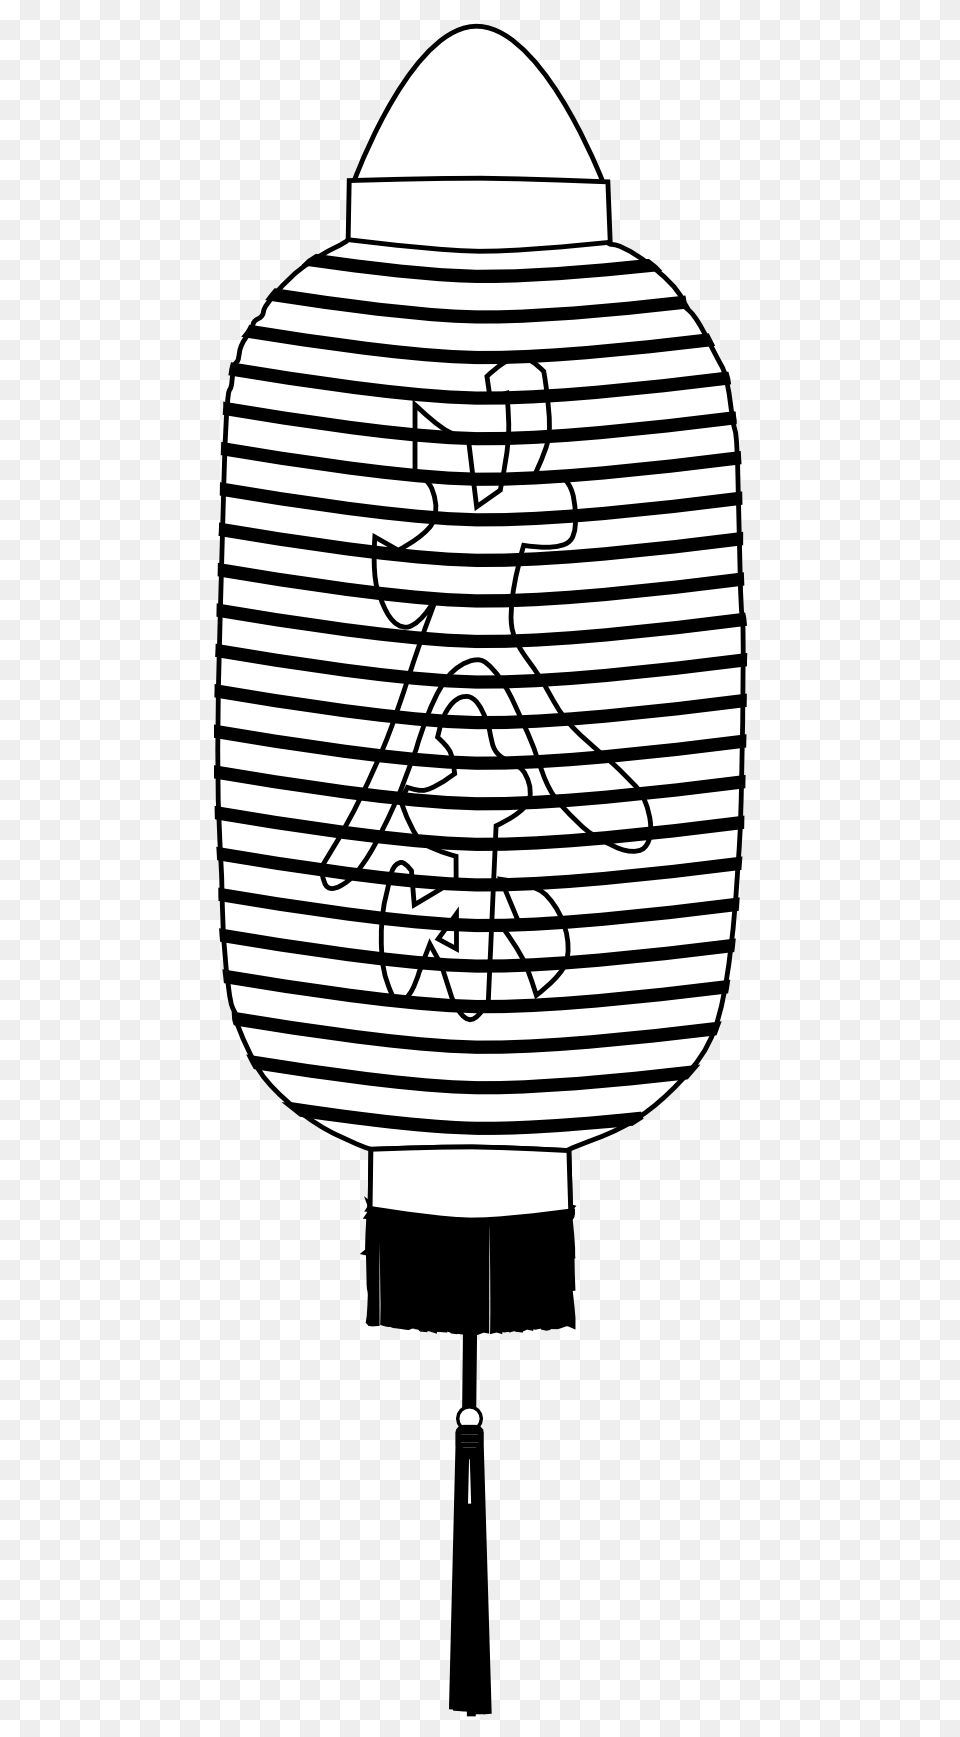 Lantern Clipart, Lamp, Lampshade Png